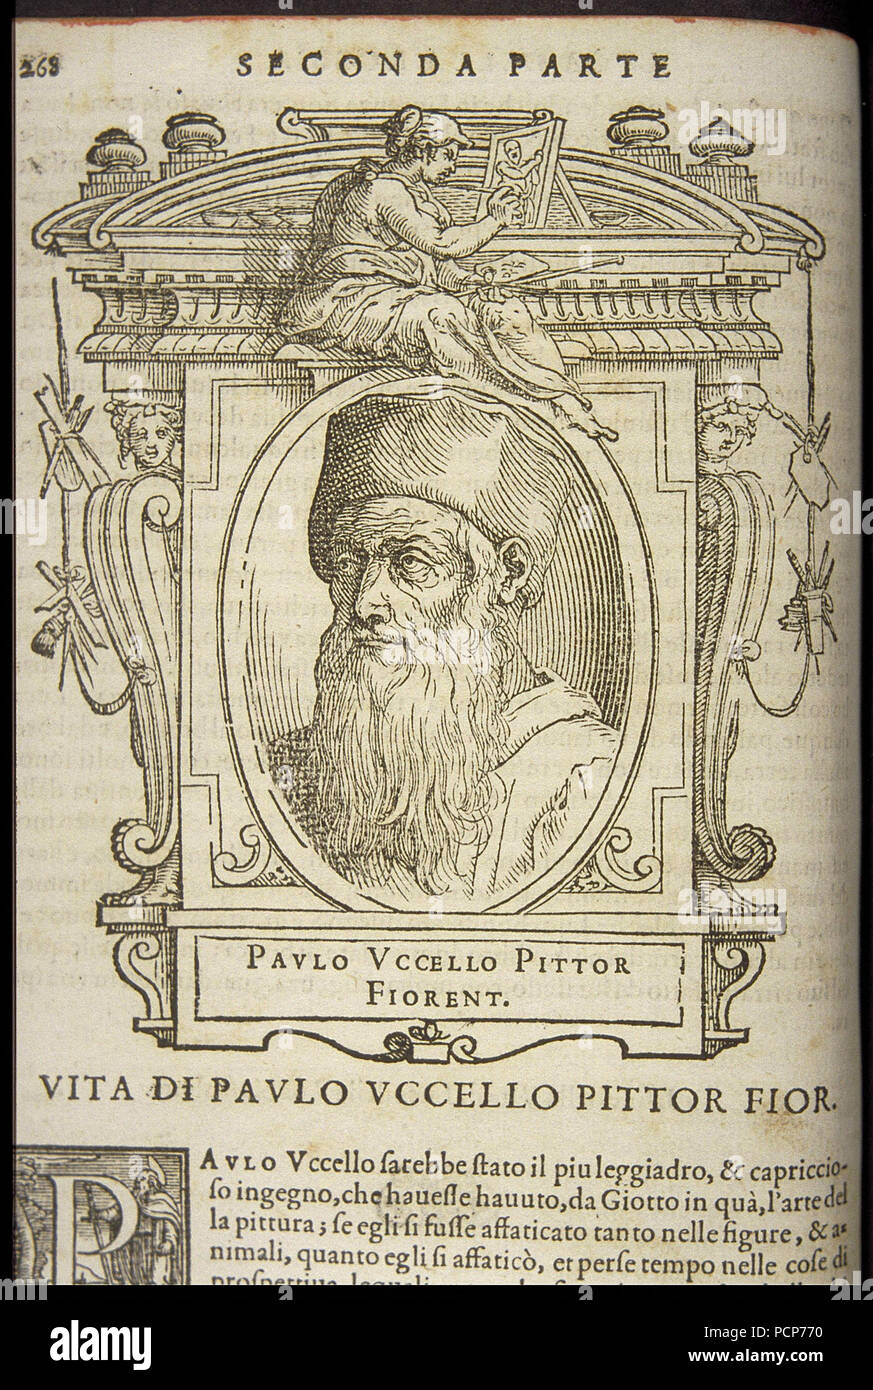 Paolo Uccello, ca 1568 Stock Photo - Alamy